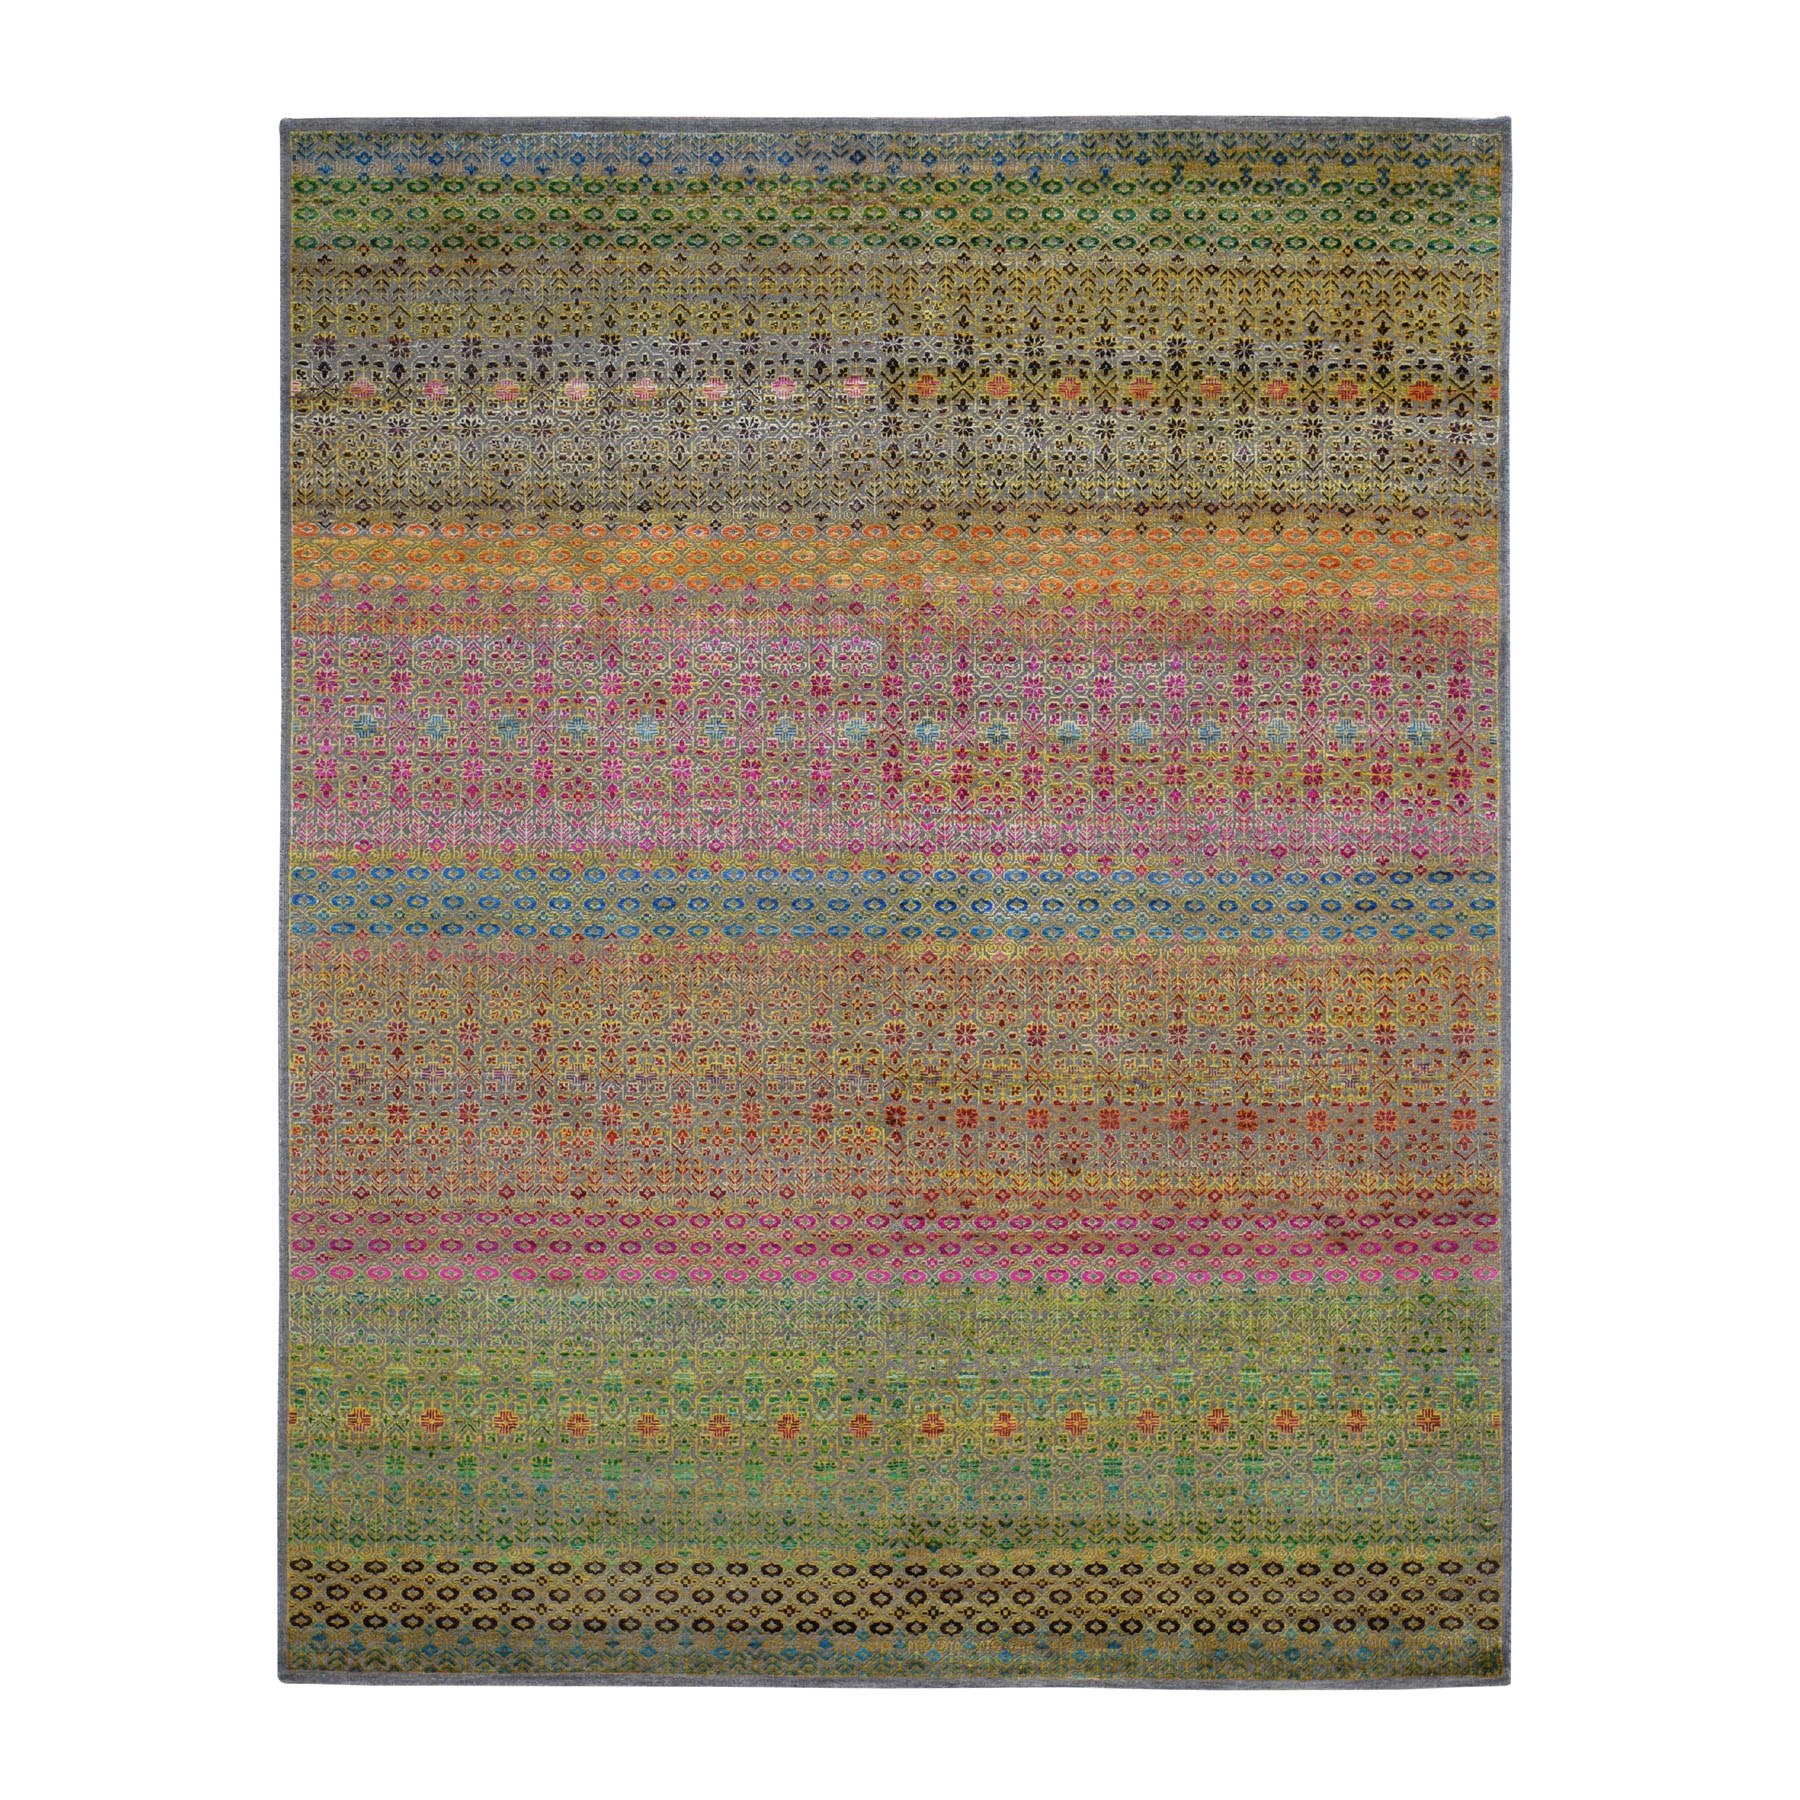 8'x10' Colorful Grass Design Sari Silk Textured Wool Modern Hand Woven Oriental Rug 